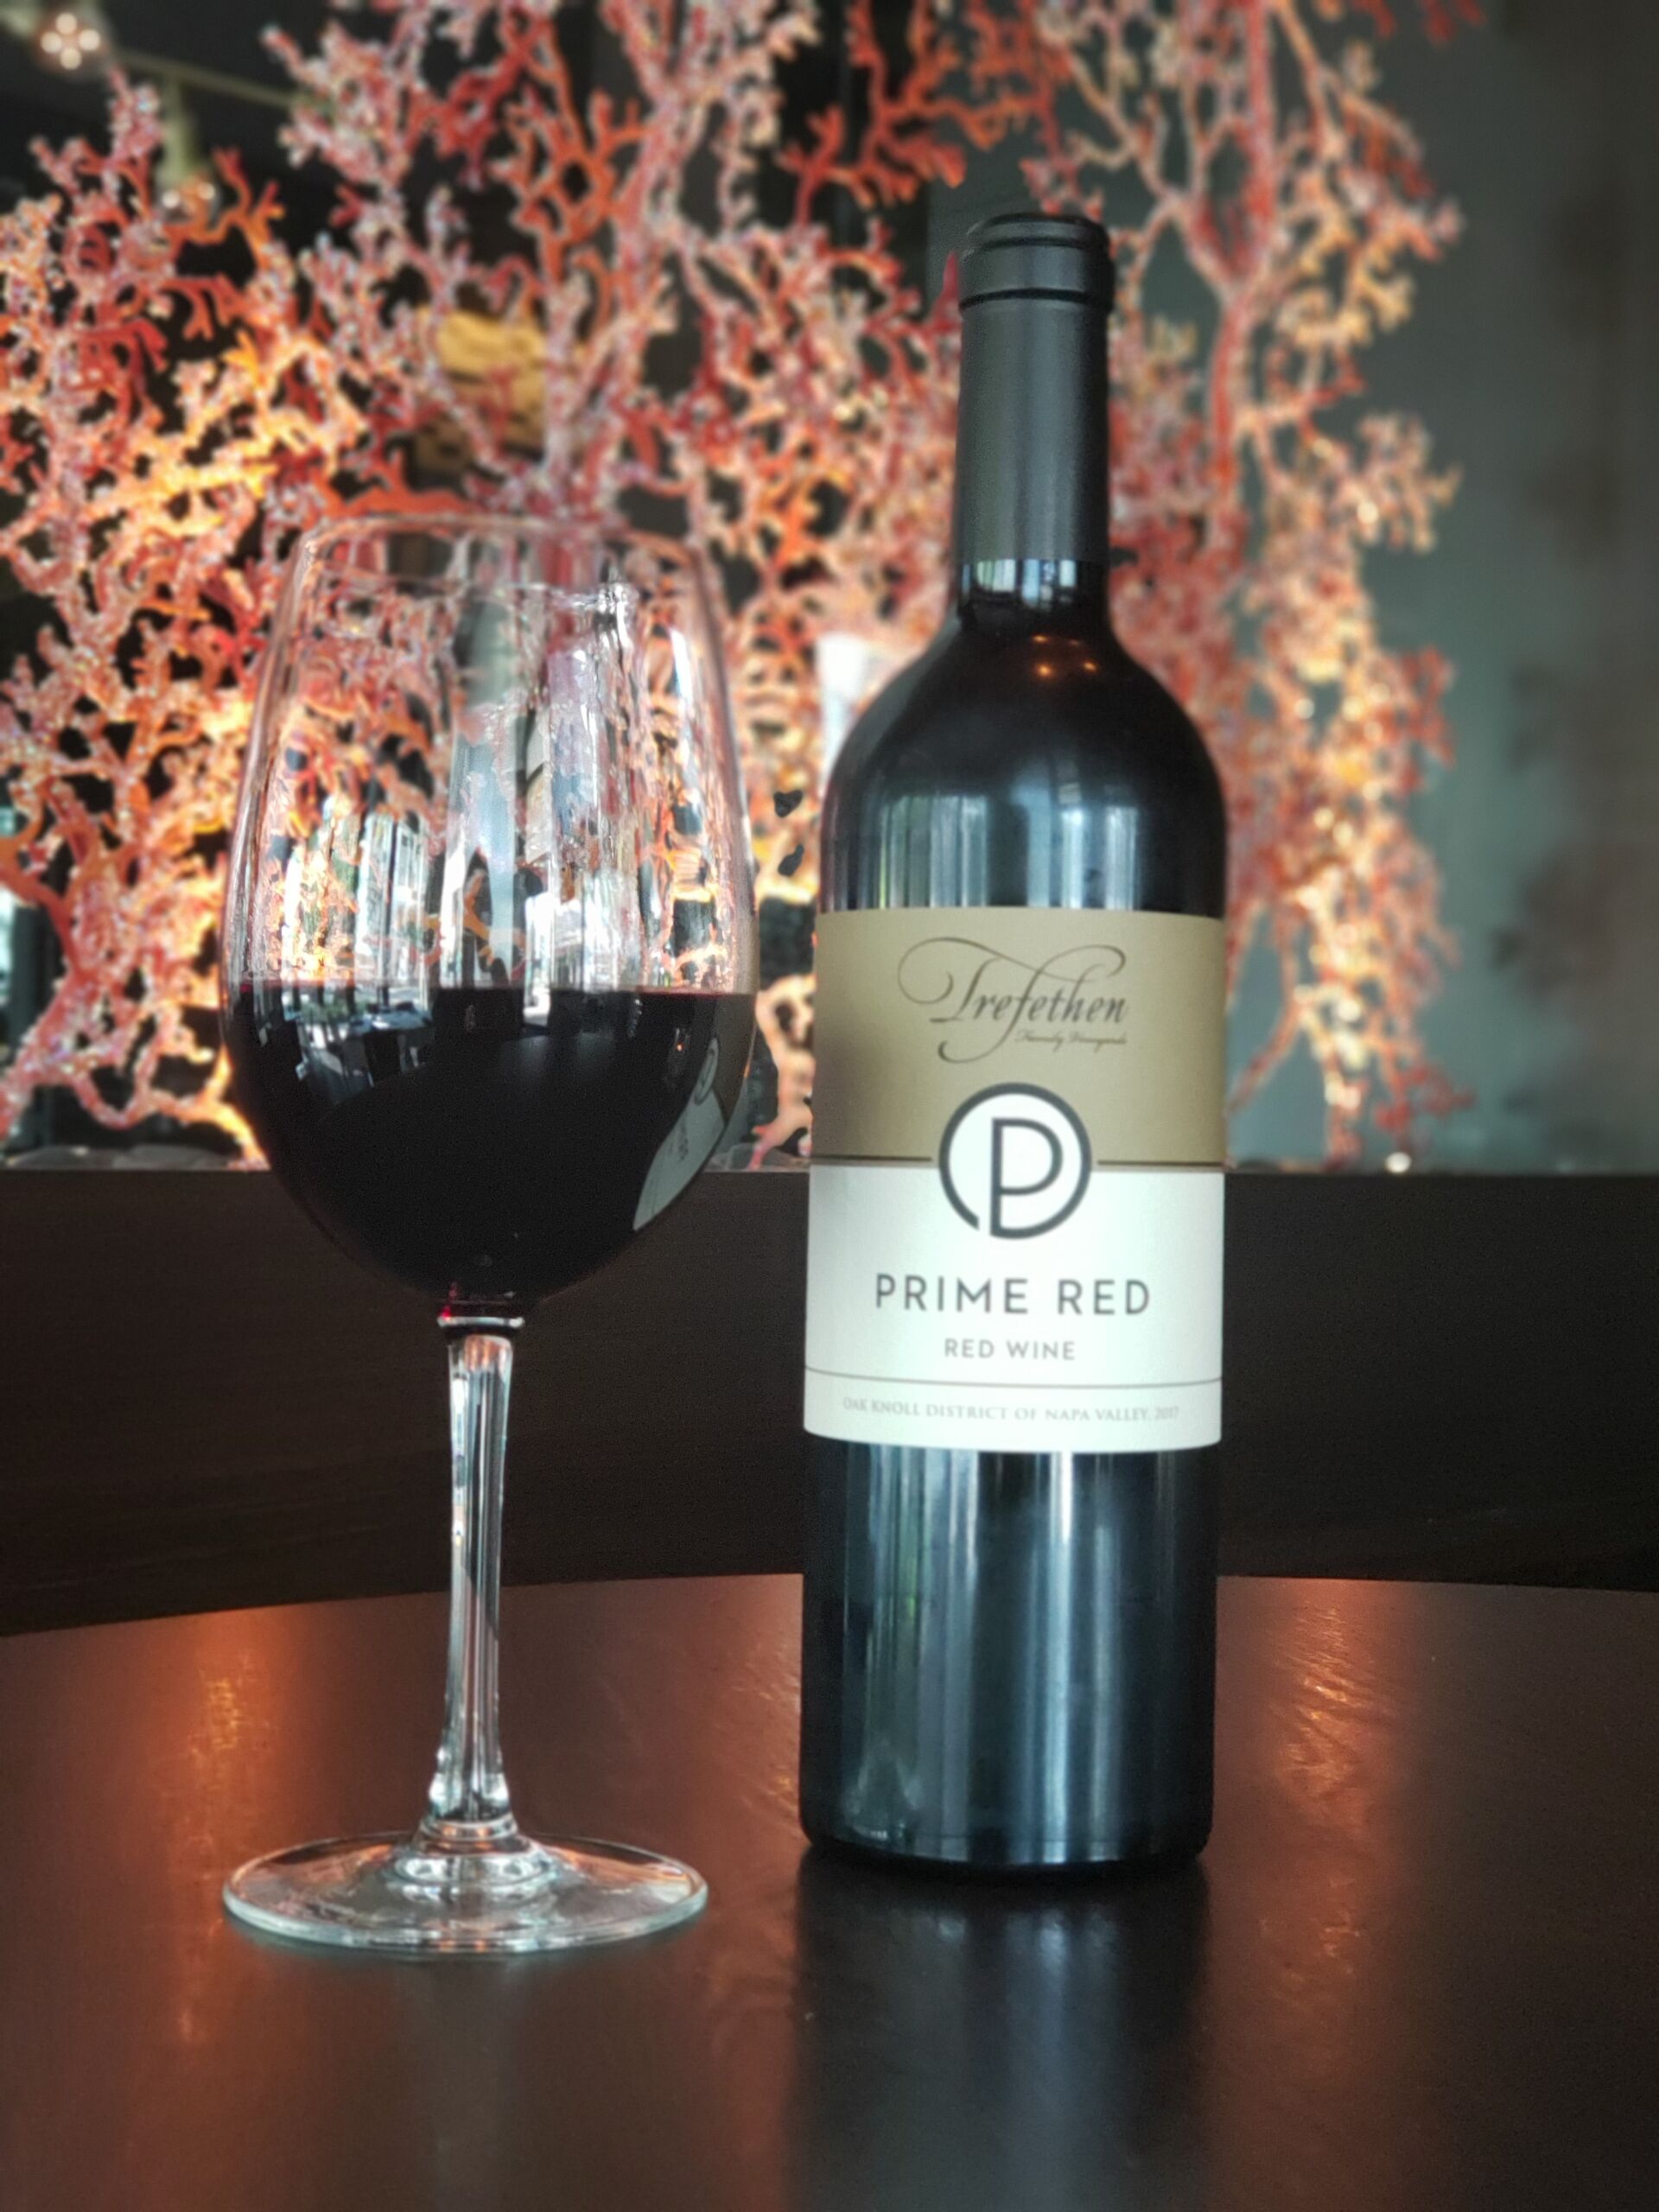 Ocean's Prime red wine. Photo provided by Ocean's Prime.